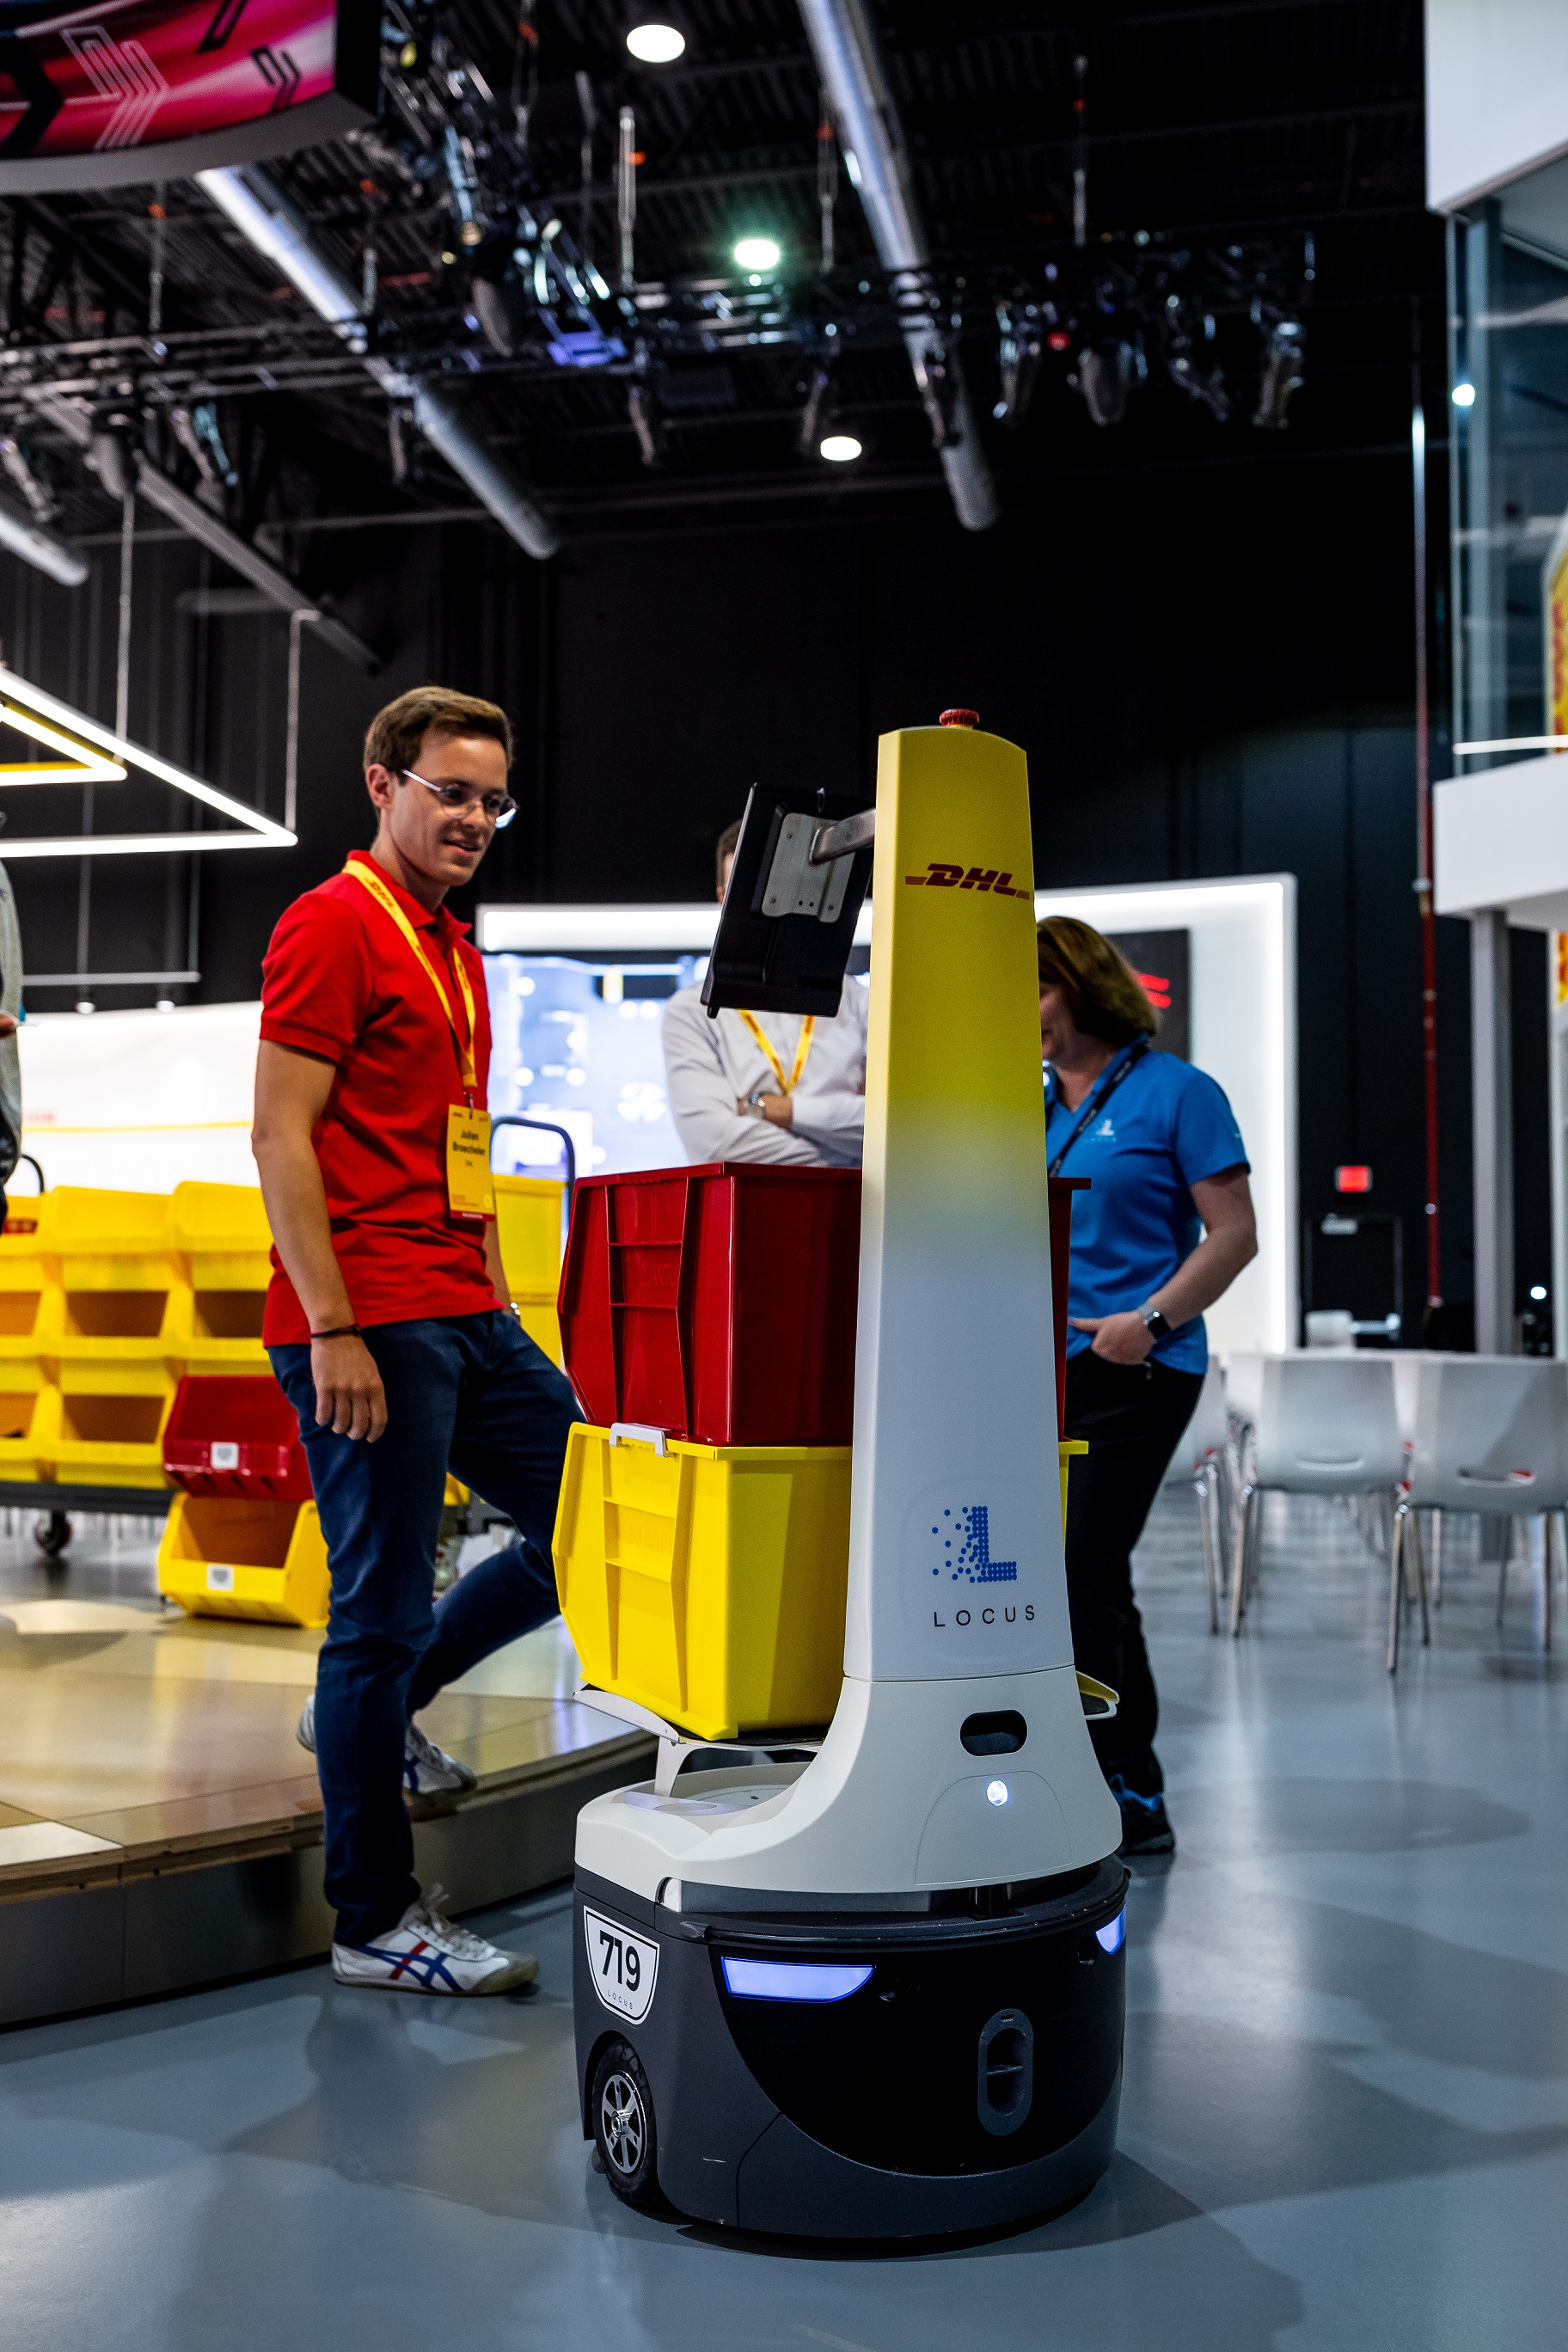 Locus Robotics' bots on display at the new DHL Americas Innovation Center